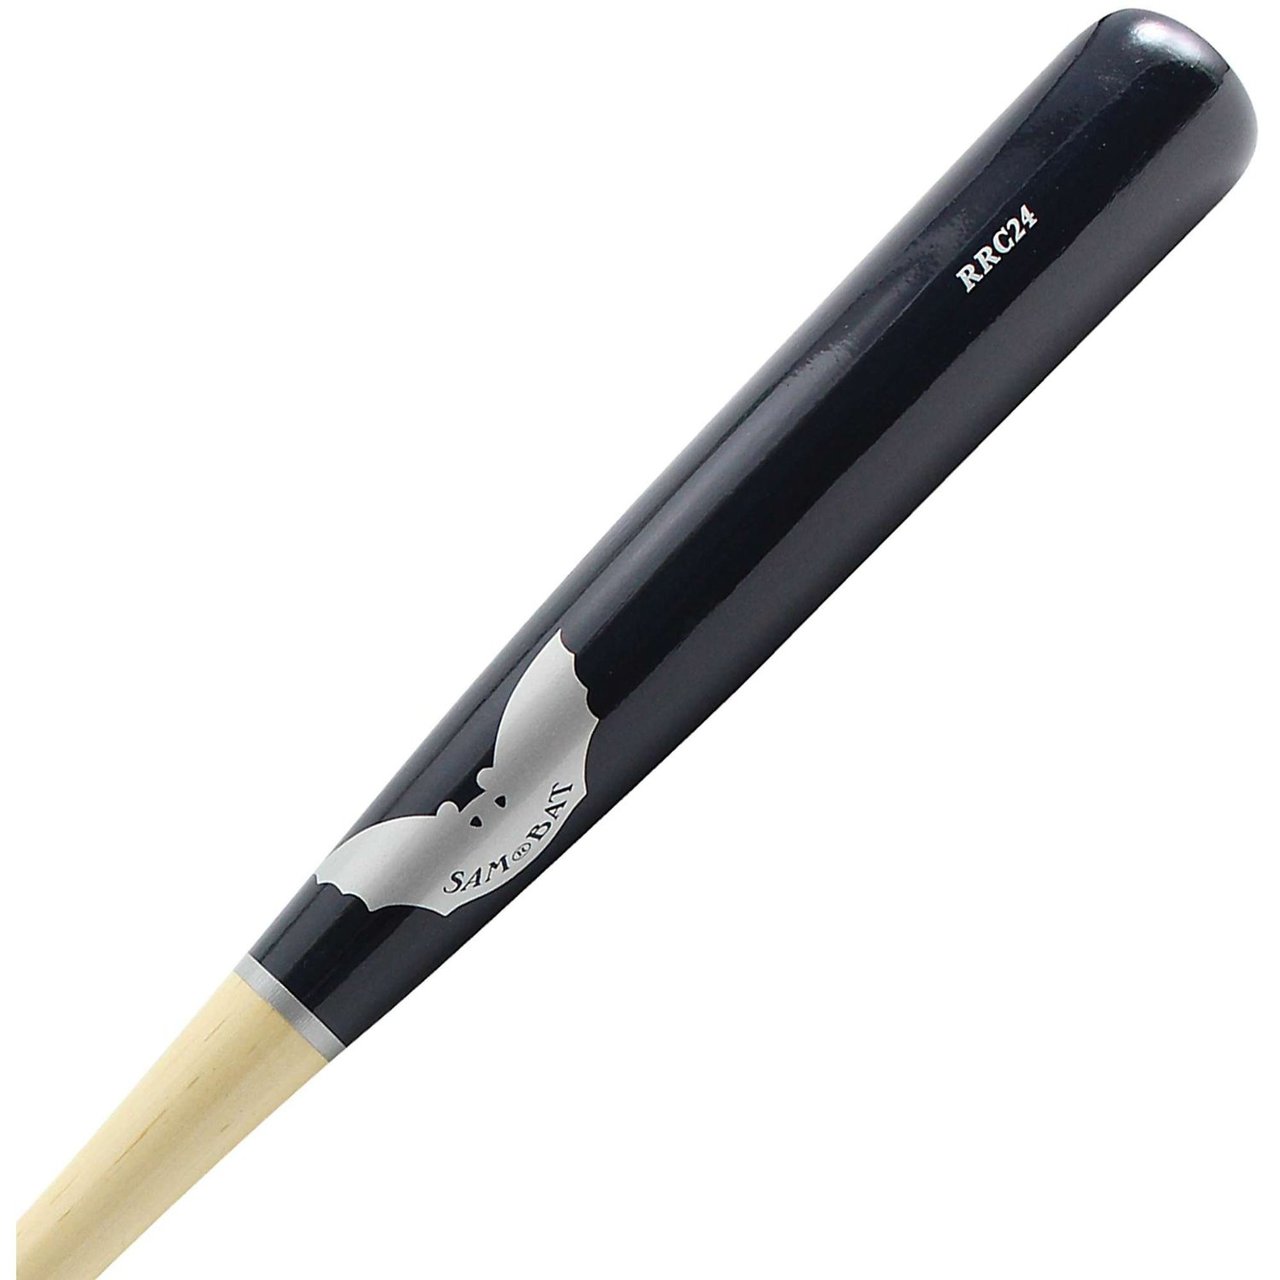 sam-bat-robinson-cano-rrc24-maple-wood-baseball-bat-33-inch RRC24-33 inch  883496004840 Robinson Cano Wood Maple Sam Bat. Sam Bats Select Stock bats